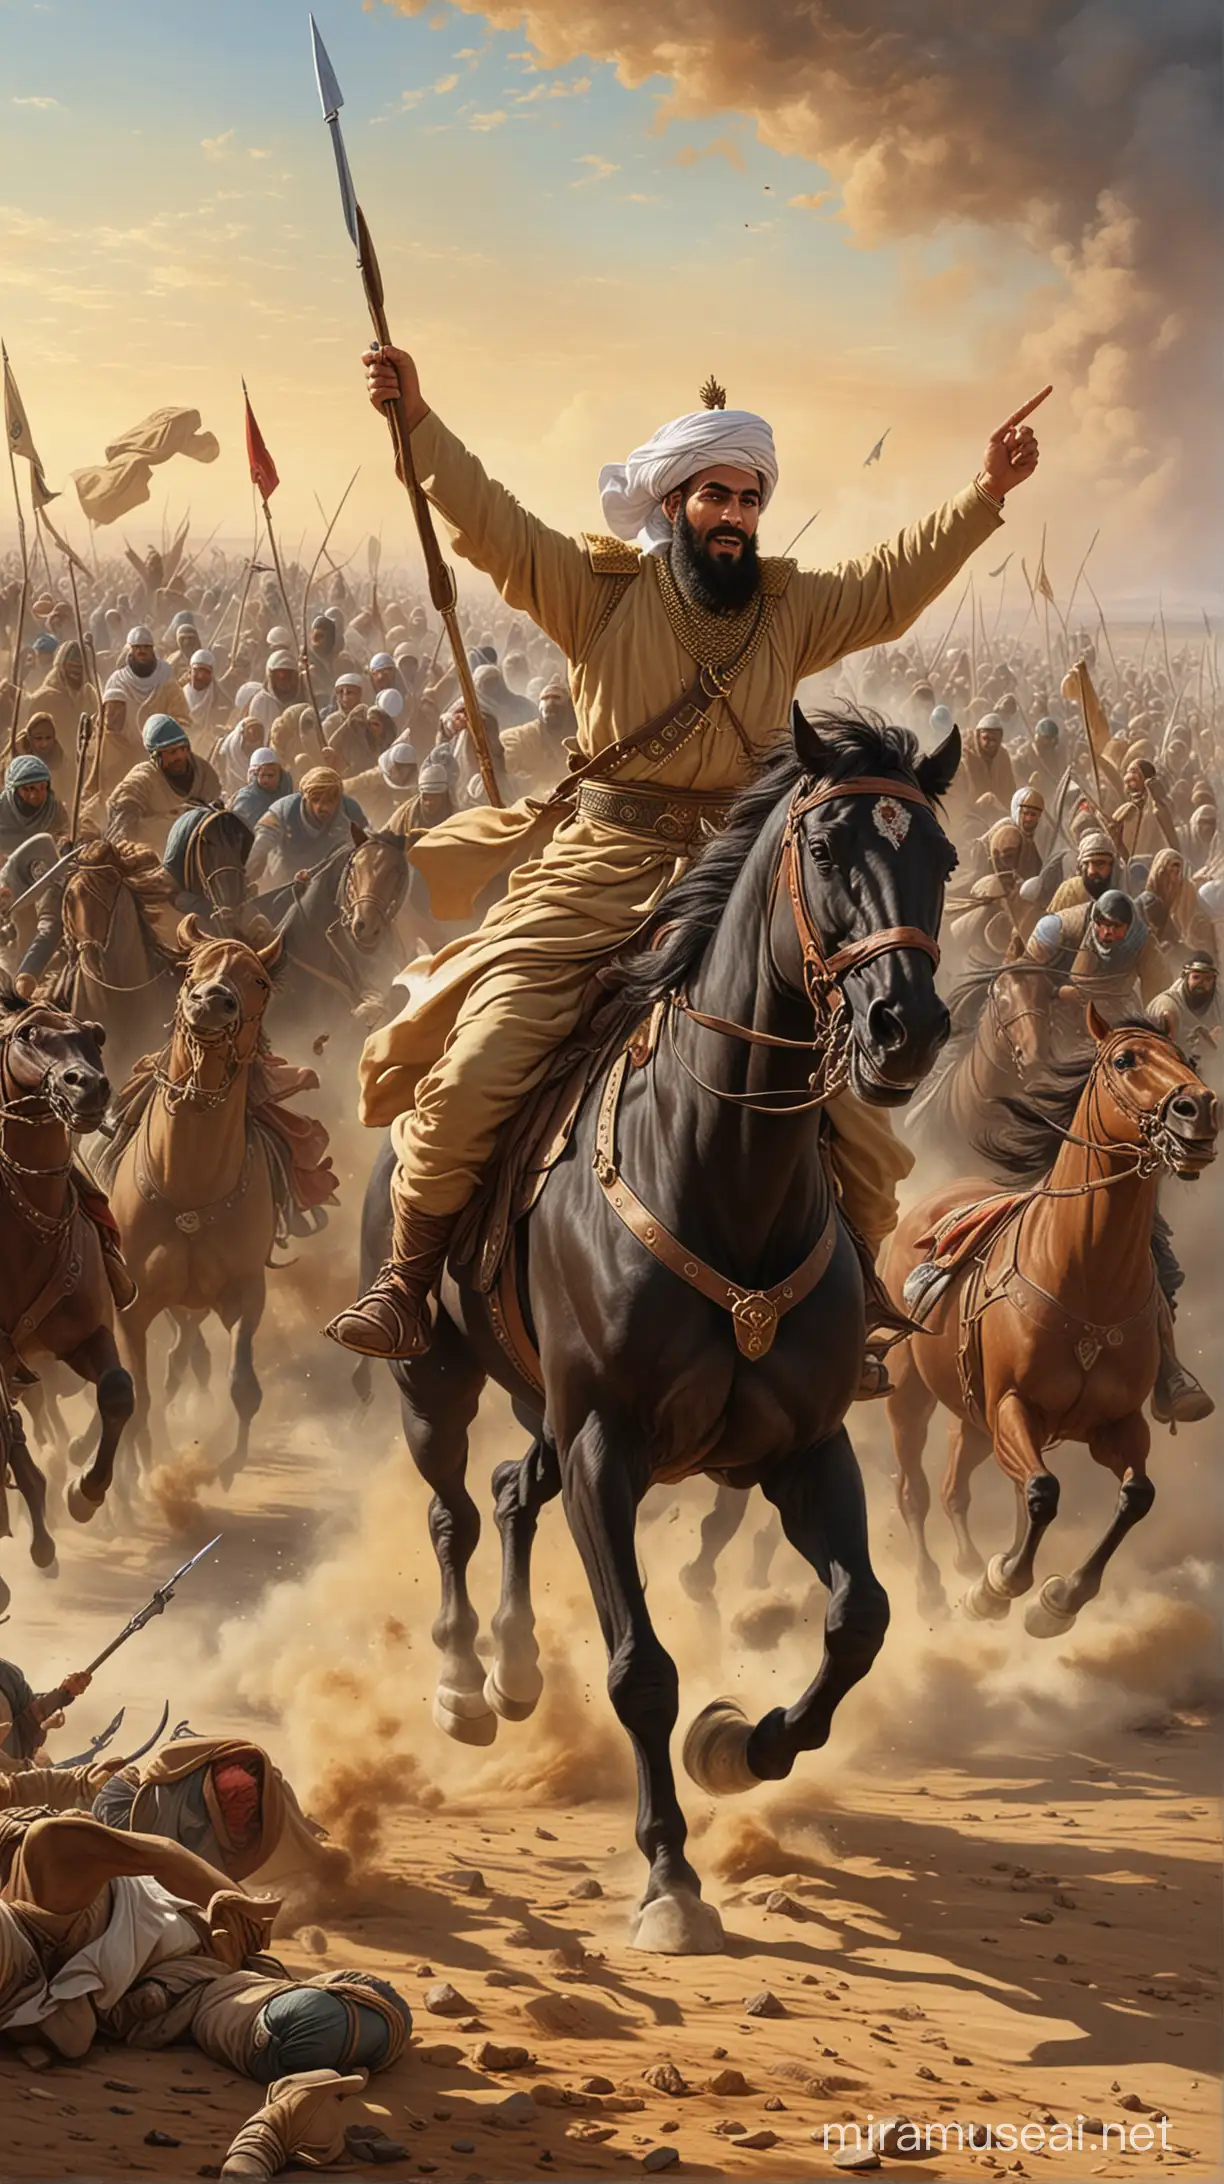 Selahaddin Eyyubis Triumphant Battlefield Victory